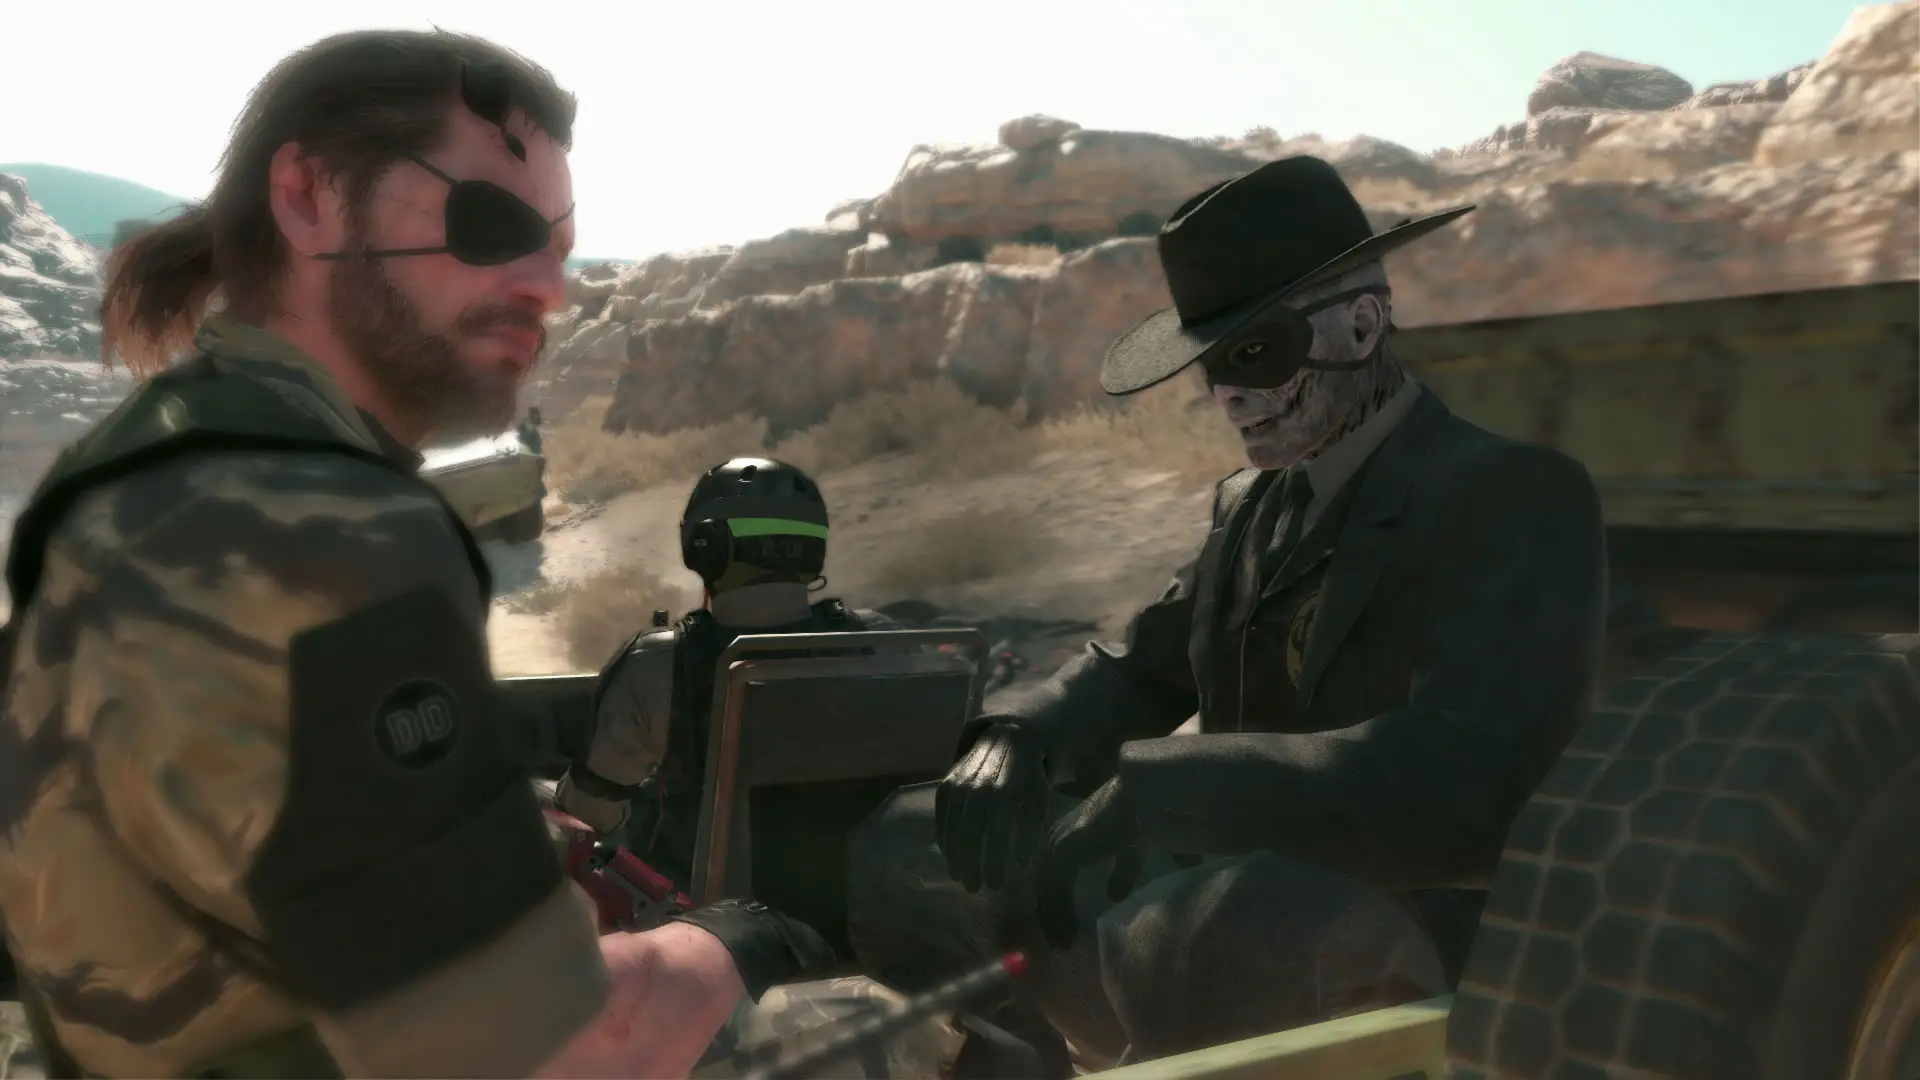 Metal-Gear-Solid-V-The-Phantom-Pain-E3-2015-Screen-Big-Boss-Skull-Face-Riding-Jeep